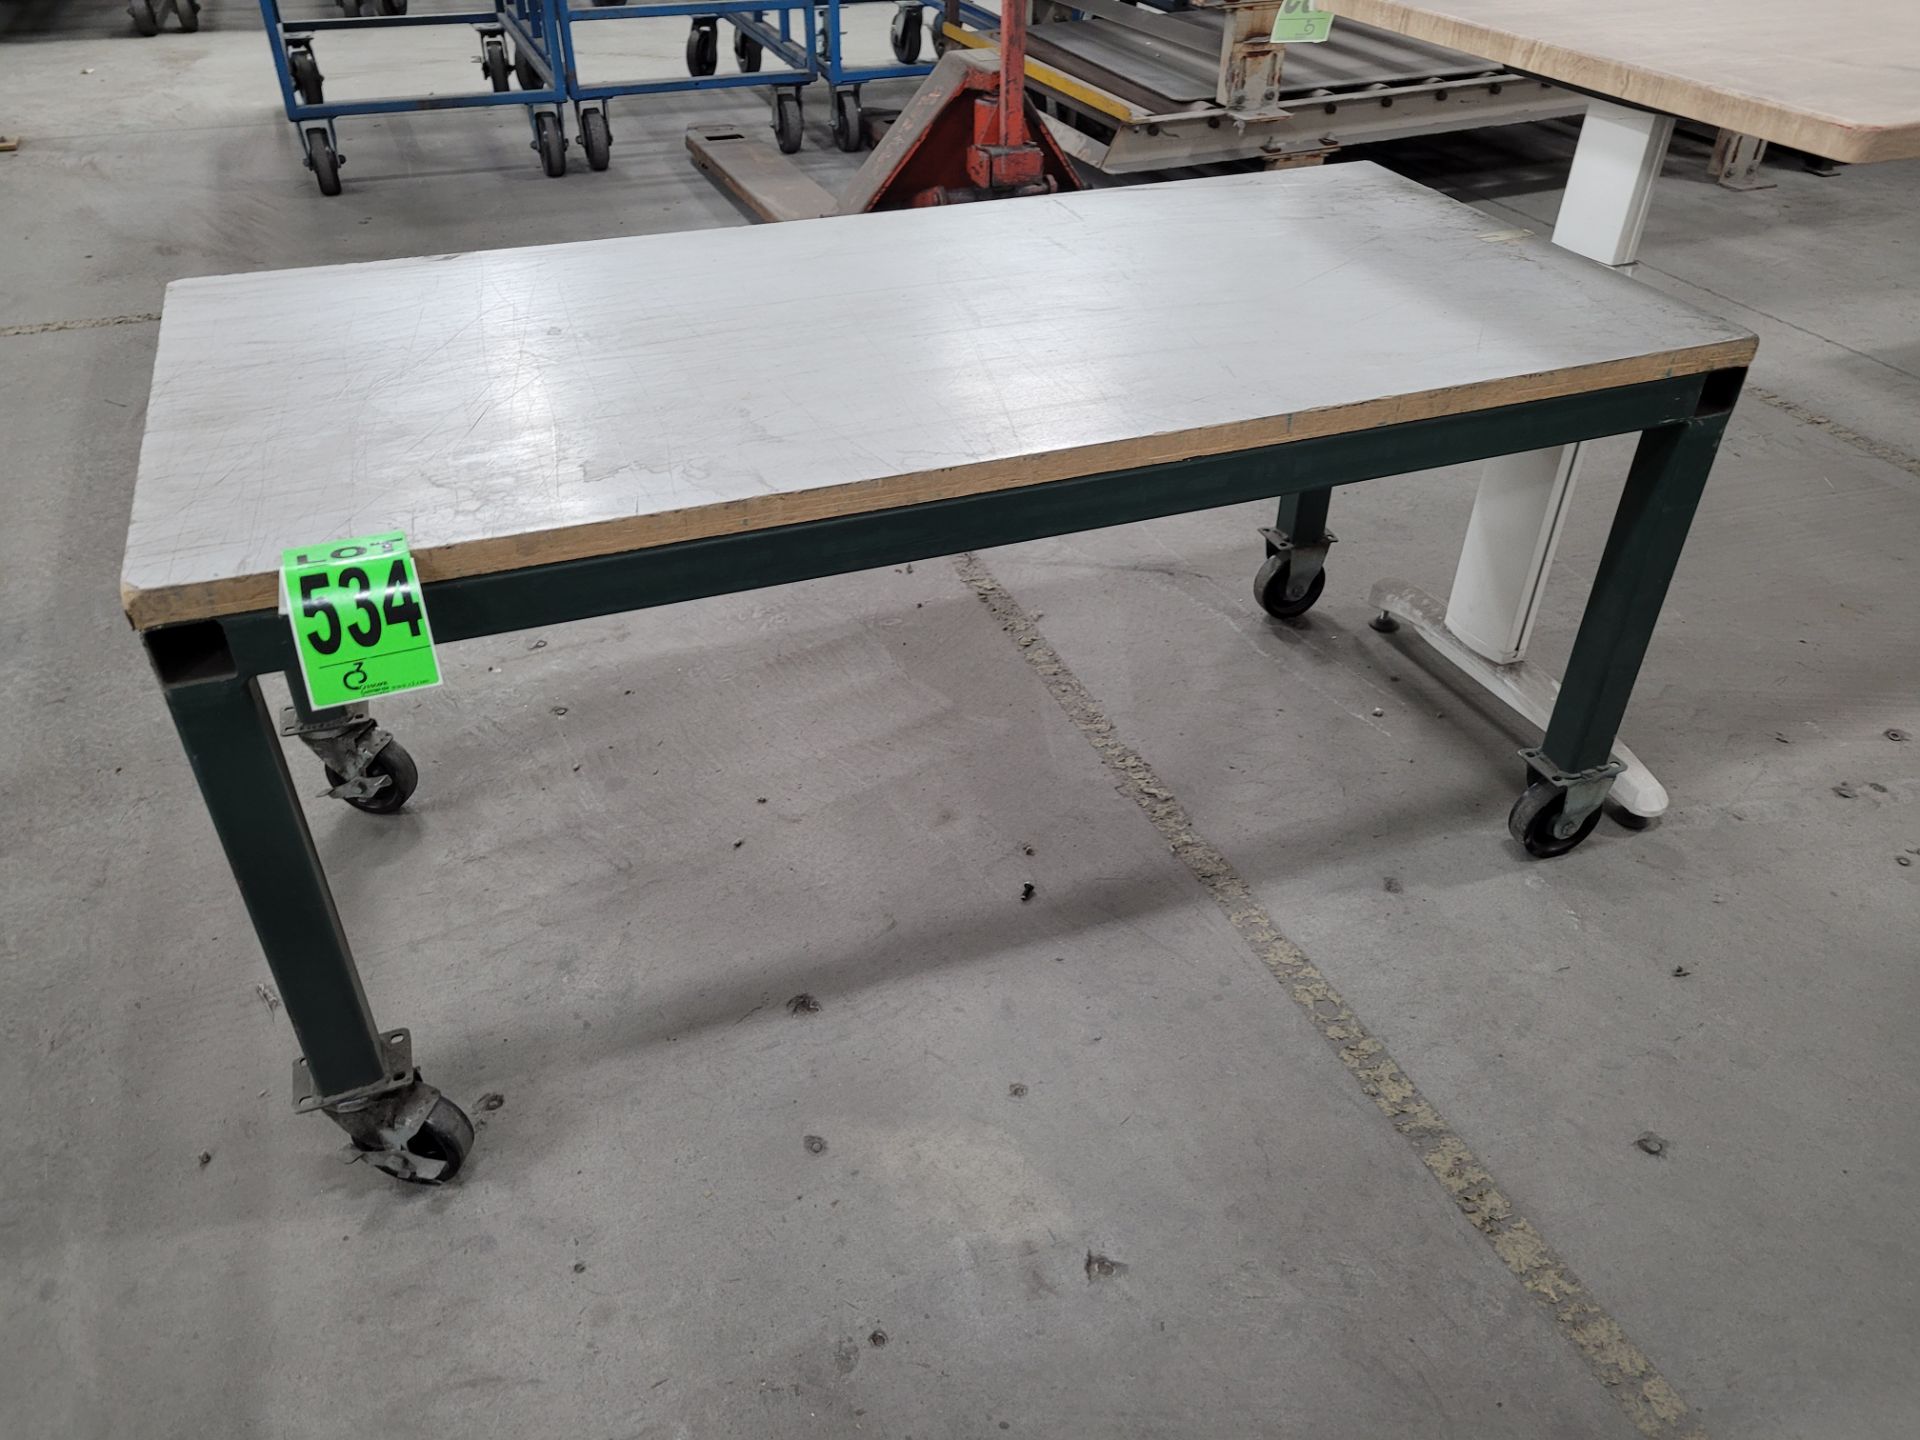 Steel frame mobile platform w/ 2" plywood surface, on lockable casters